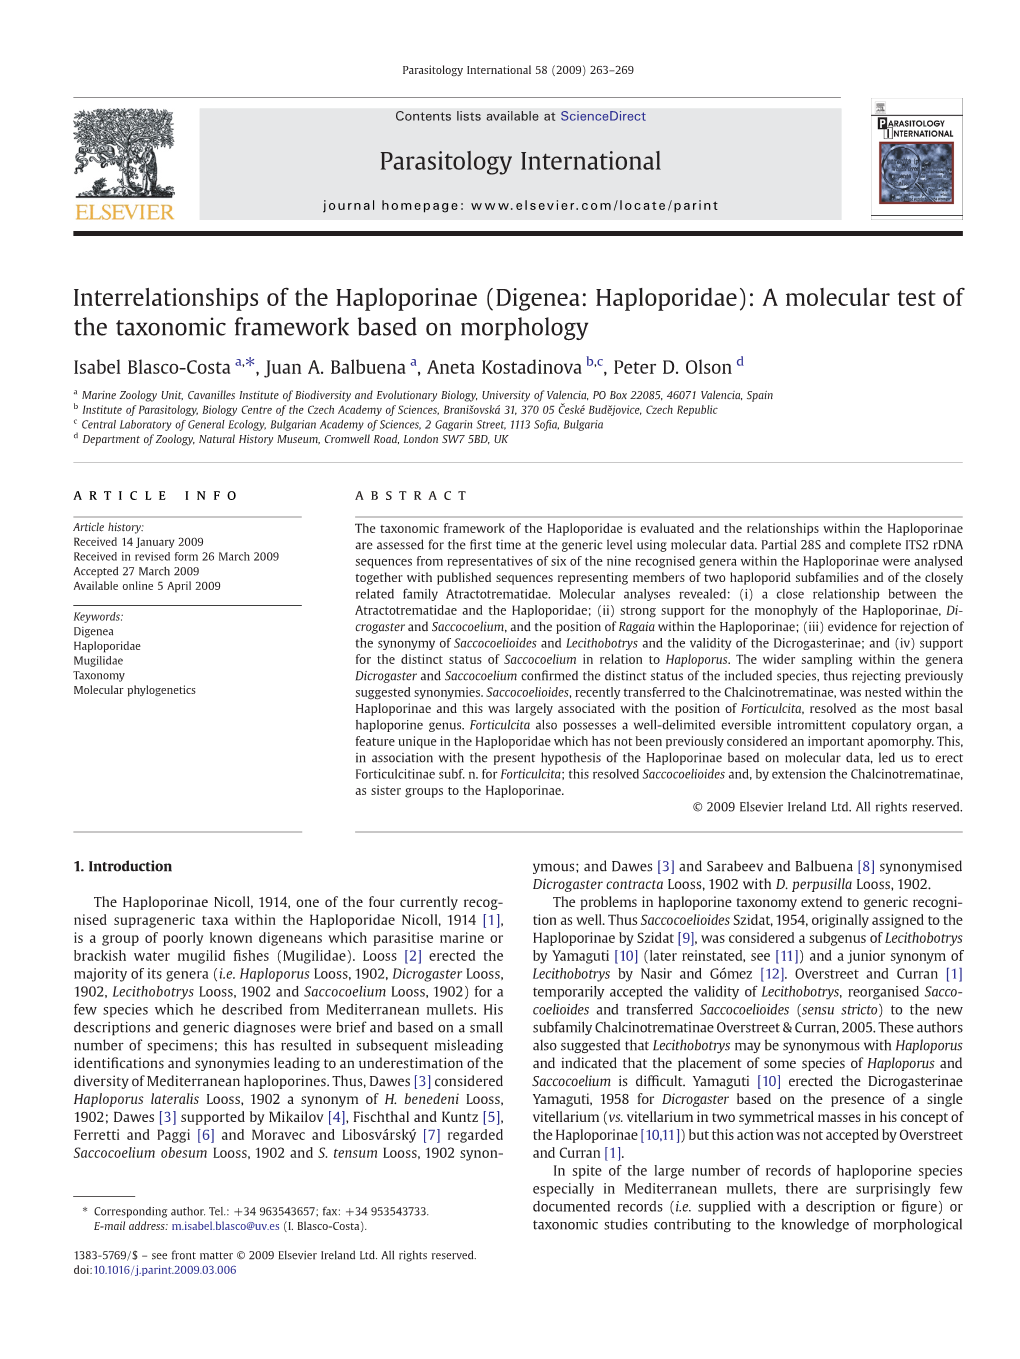 Interrelationships of the Haploporinae (Digenea: Haploporidae): a Molecular Test of the Taxonomic Framework Based on Morphology